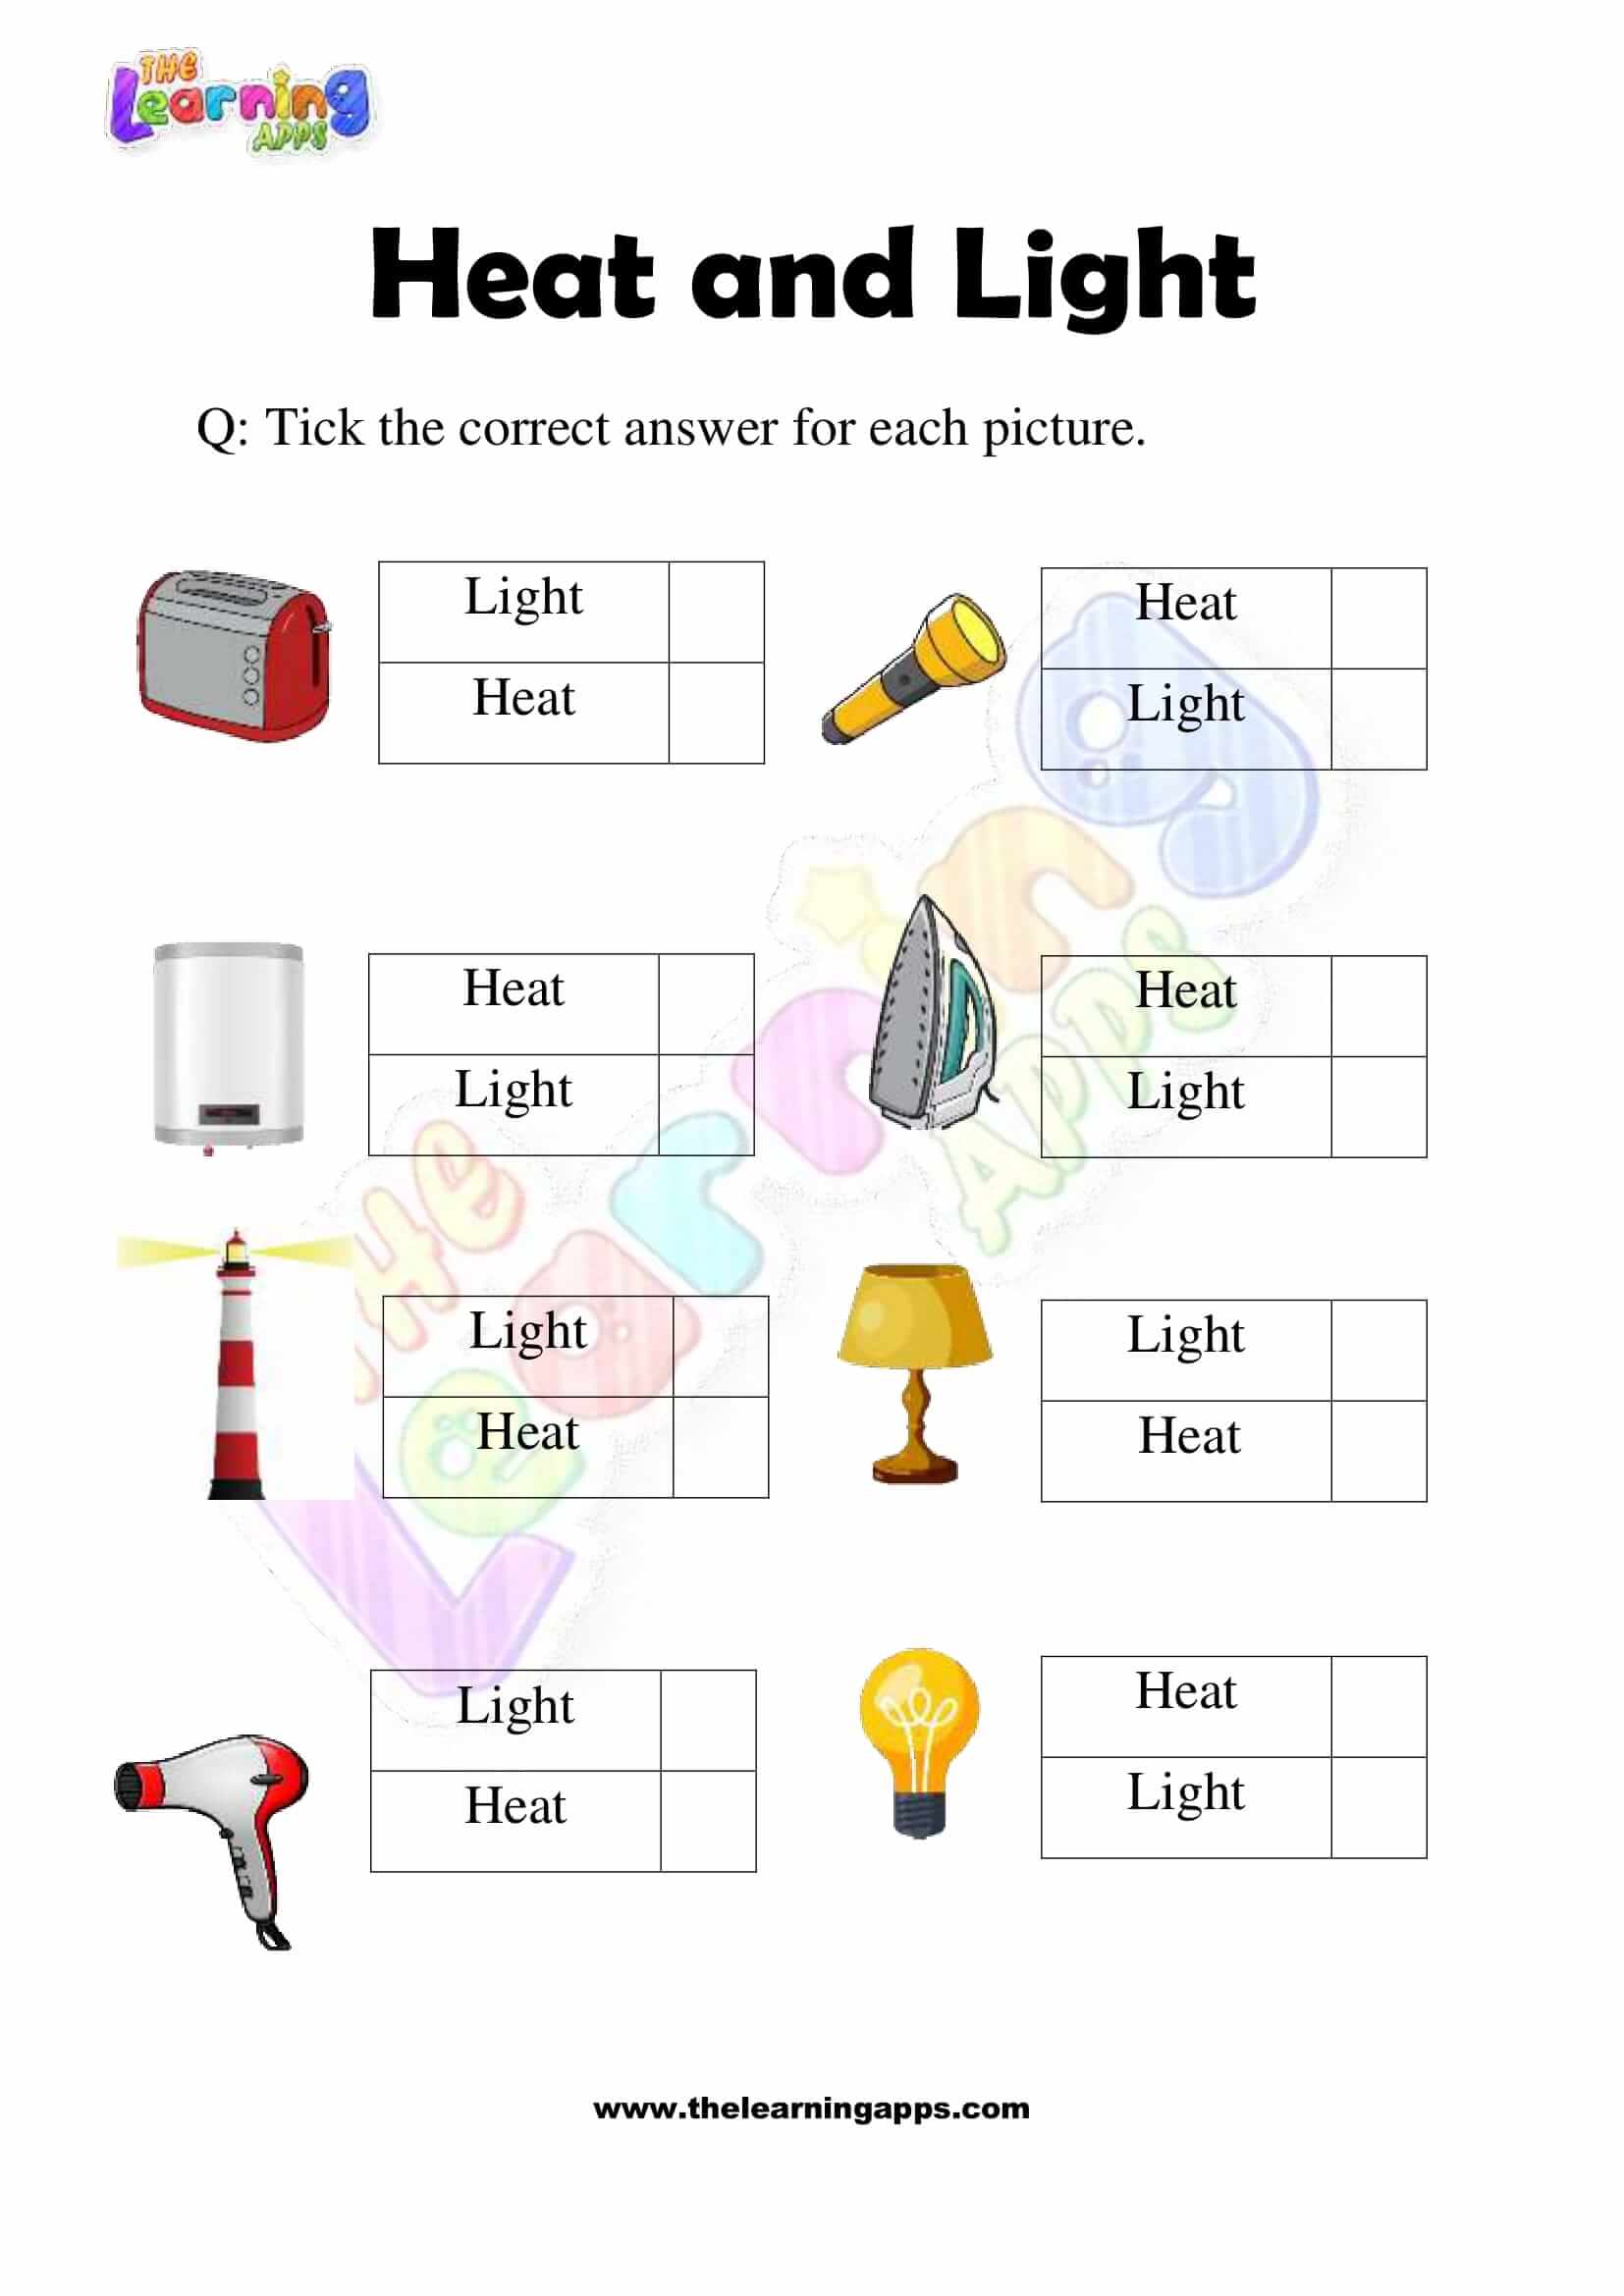 Heat and Light Worksheet - Grade 2 - Activity 9